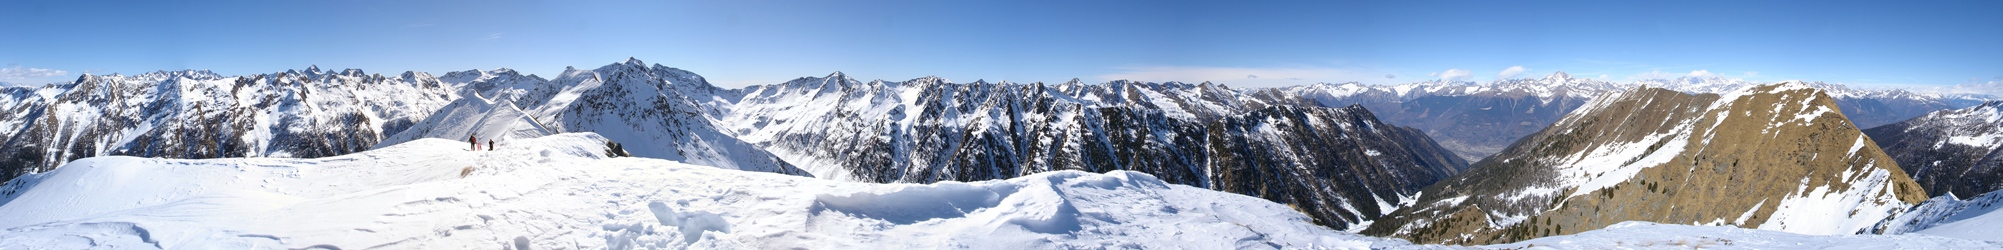 Panoramica a 360° dalla Cima Querciada  2382 m, 02-03-2008 h 12,30. Clicca per vedere in grande.